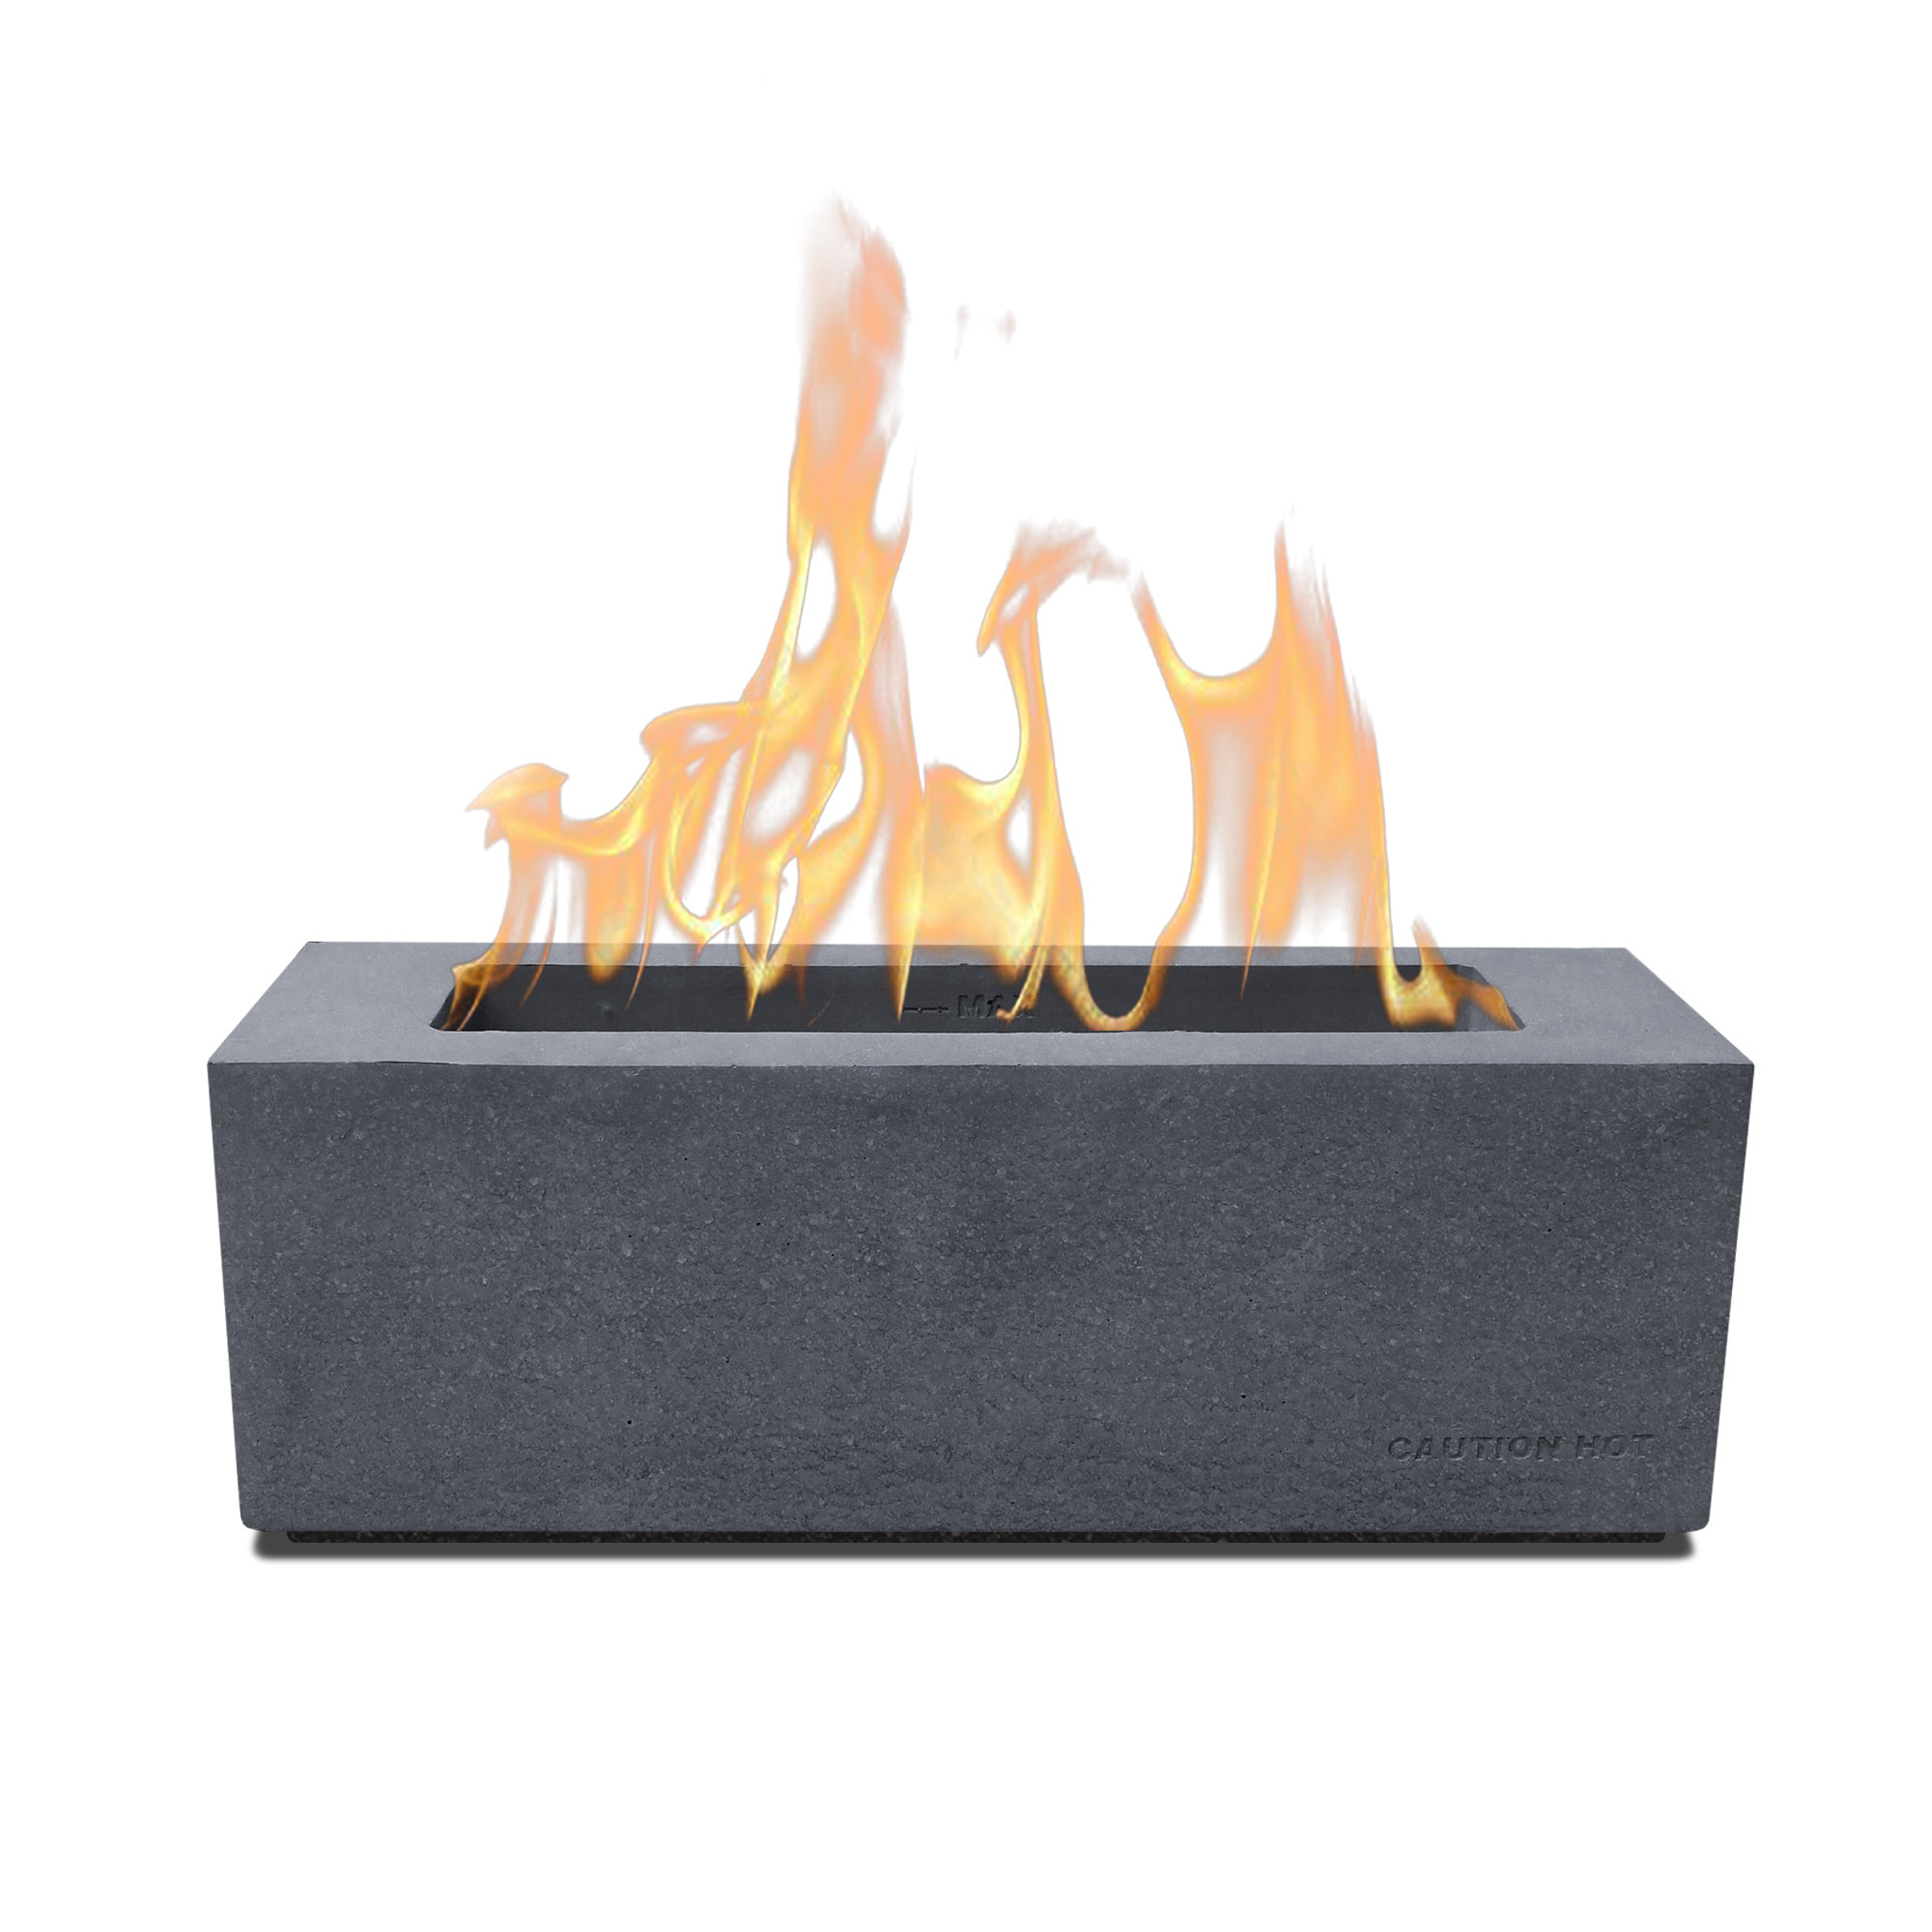 Tabletop Fire Pit - Metal Black  Portable Fire Pits, No Ethanol